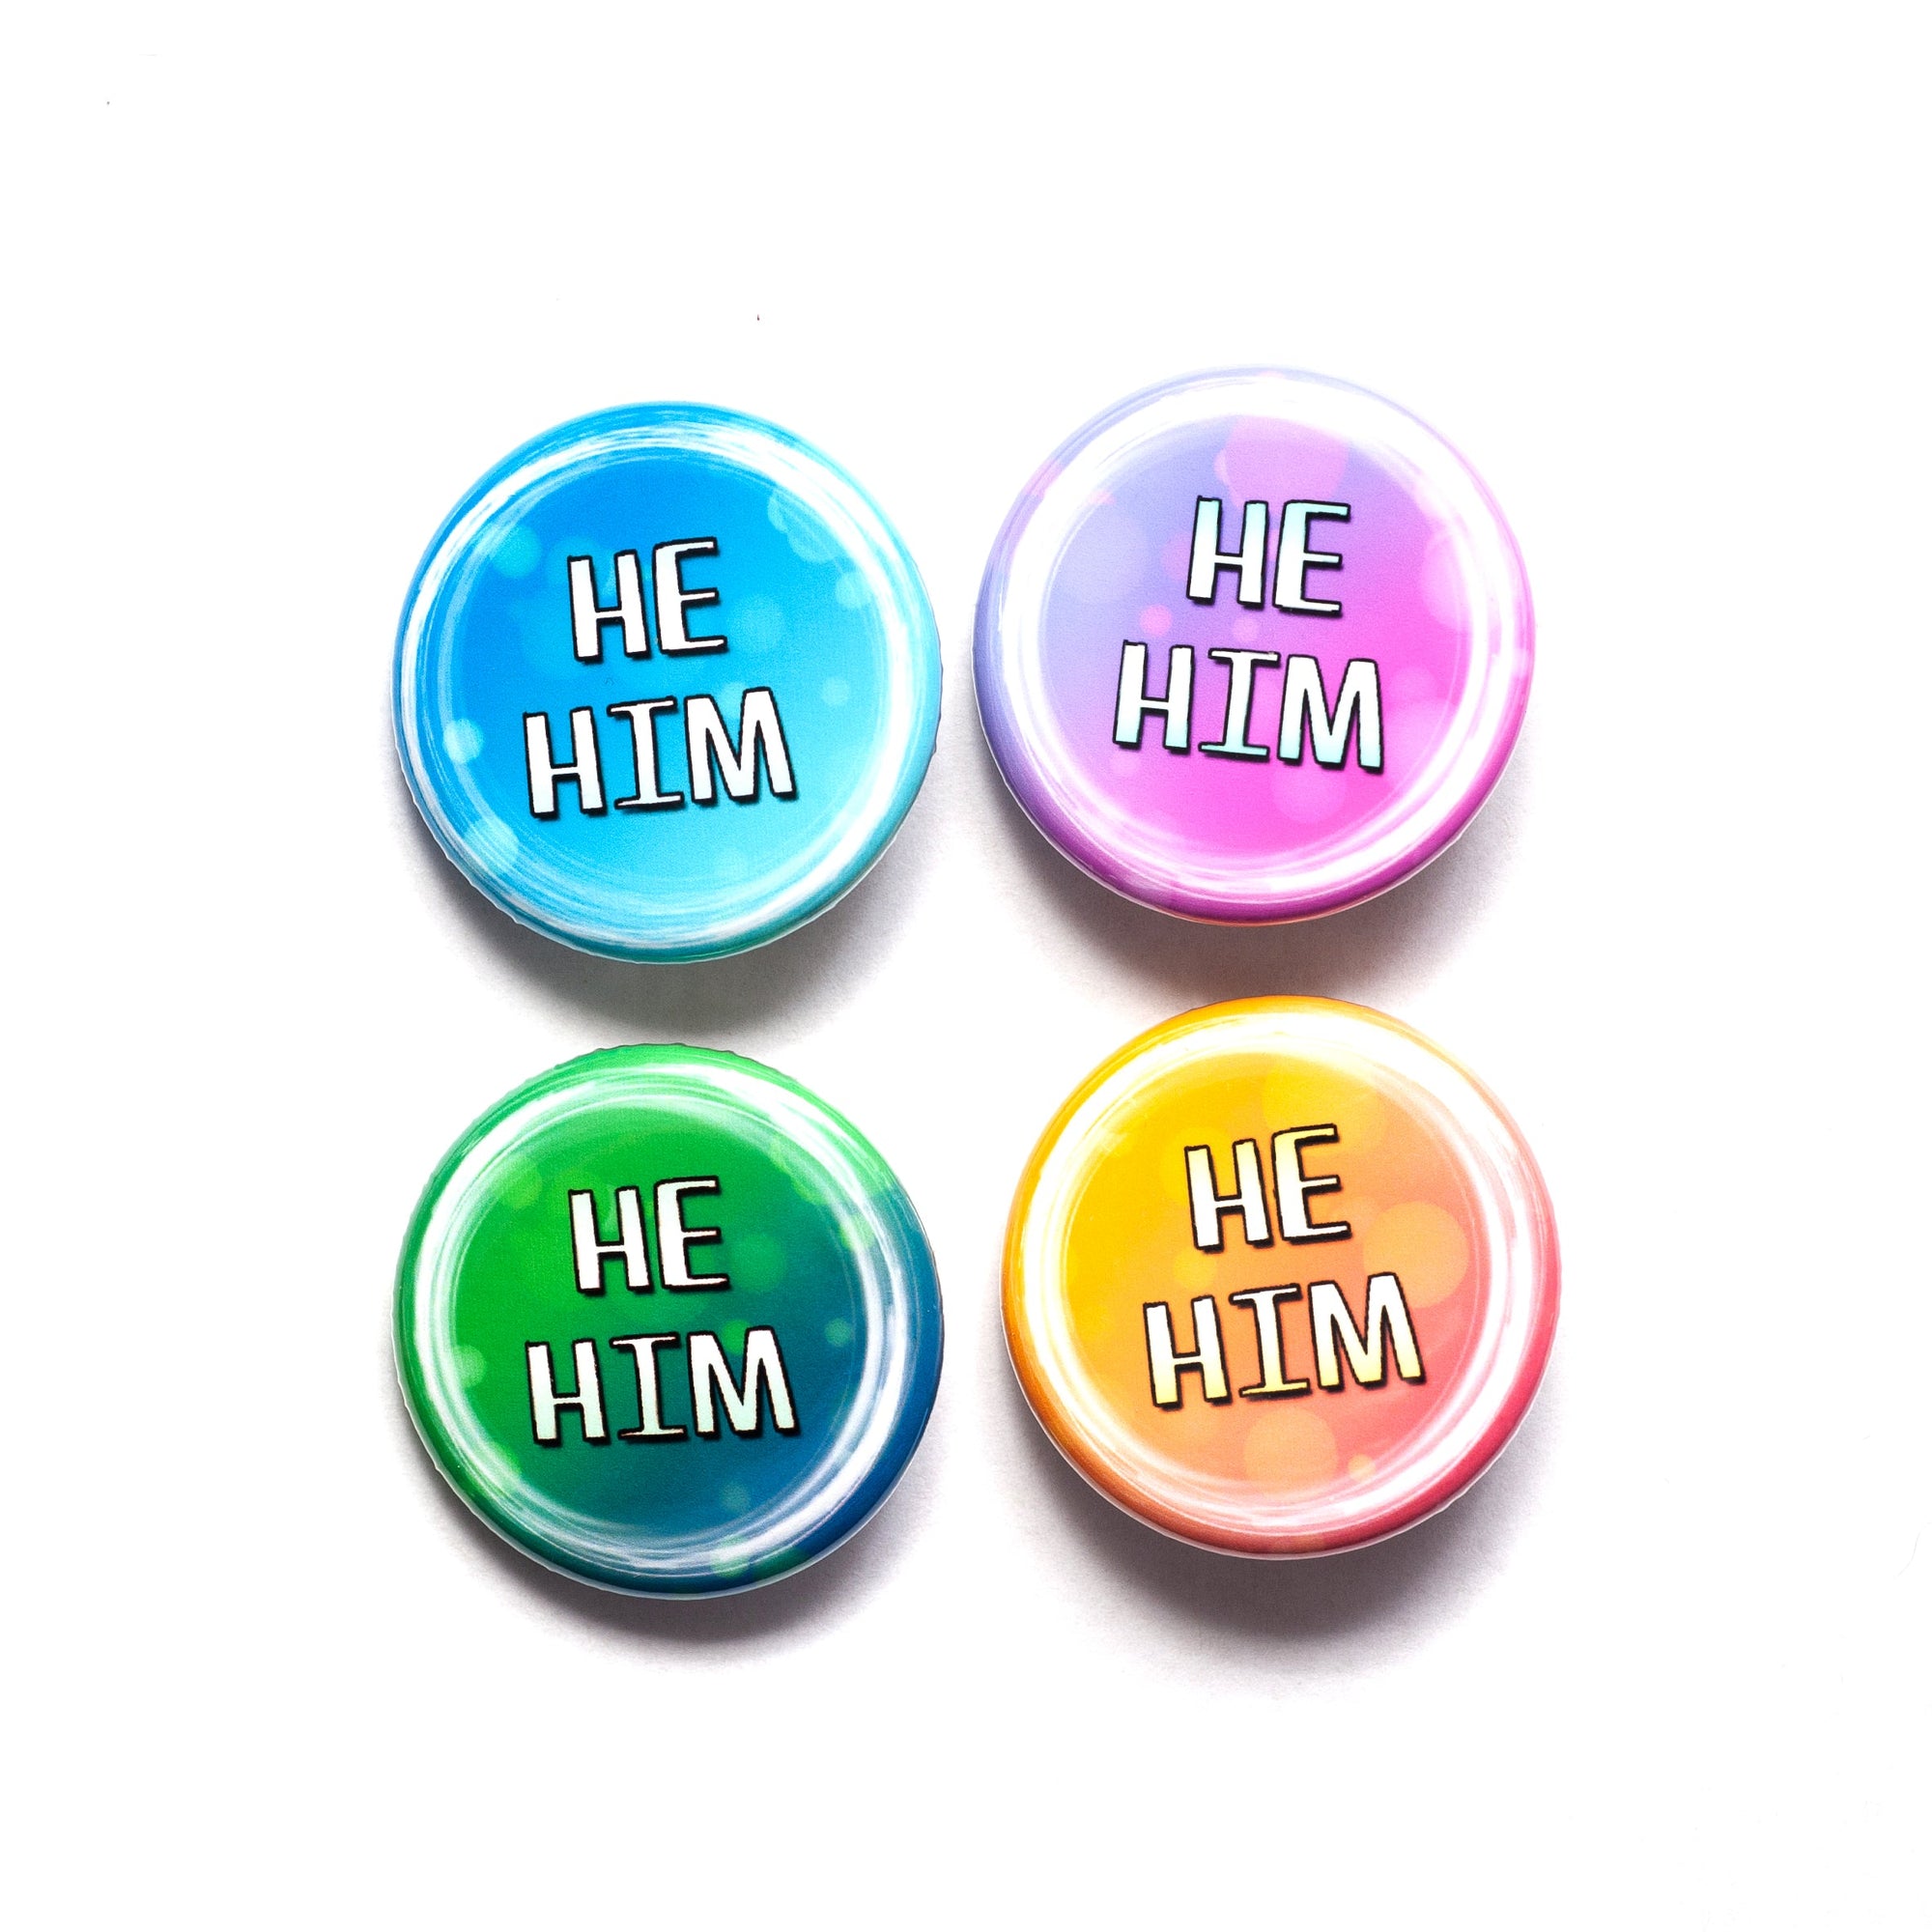 He/him pronoun buttons